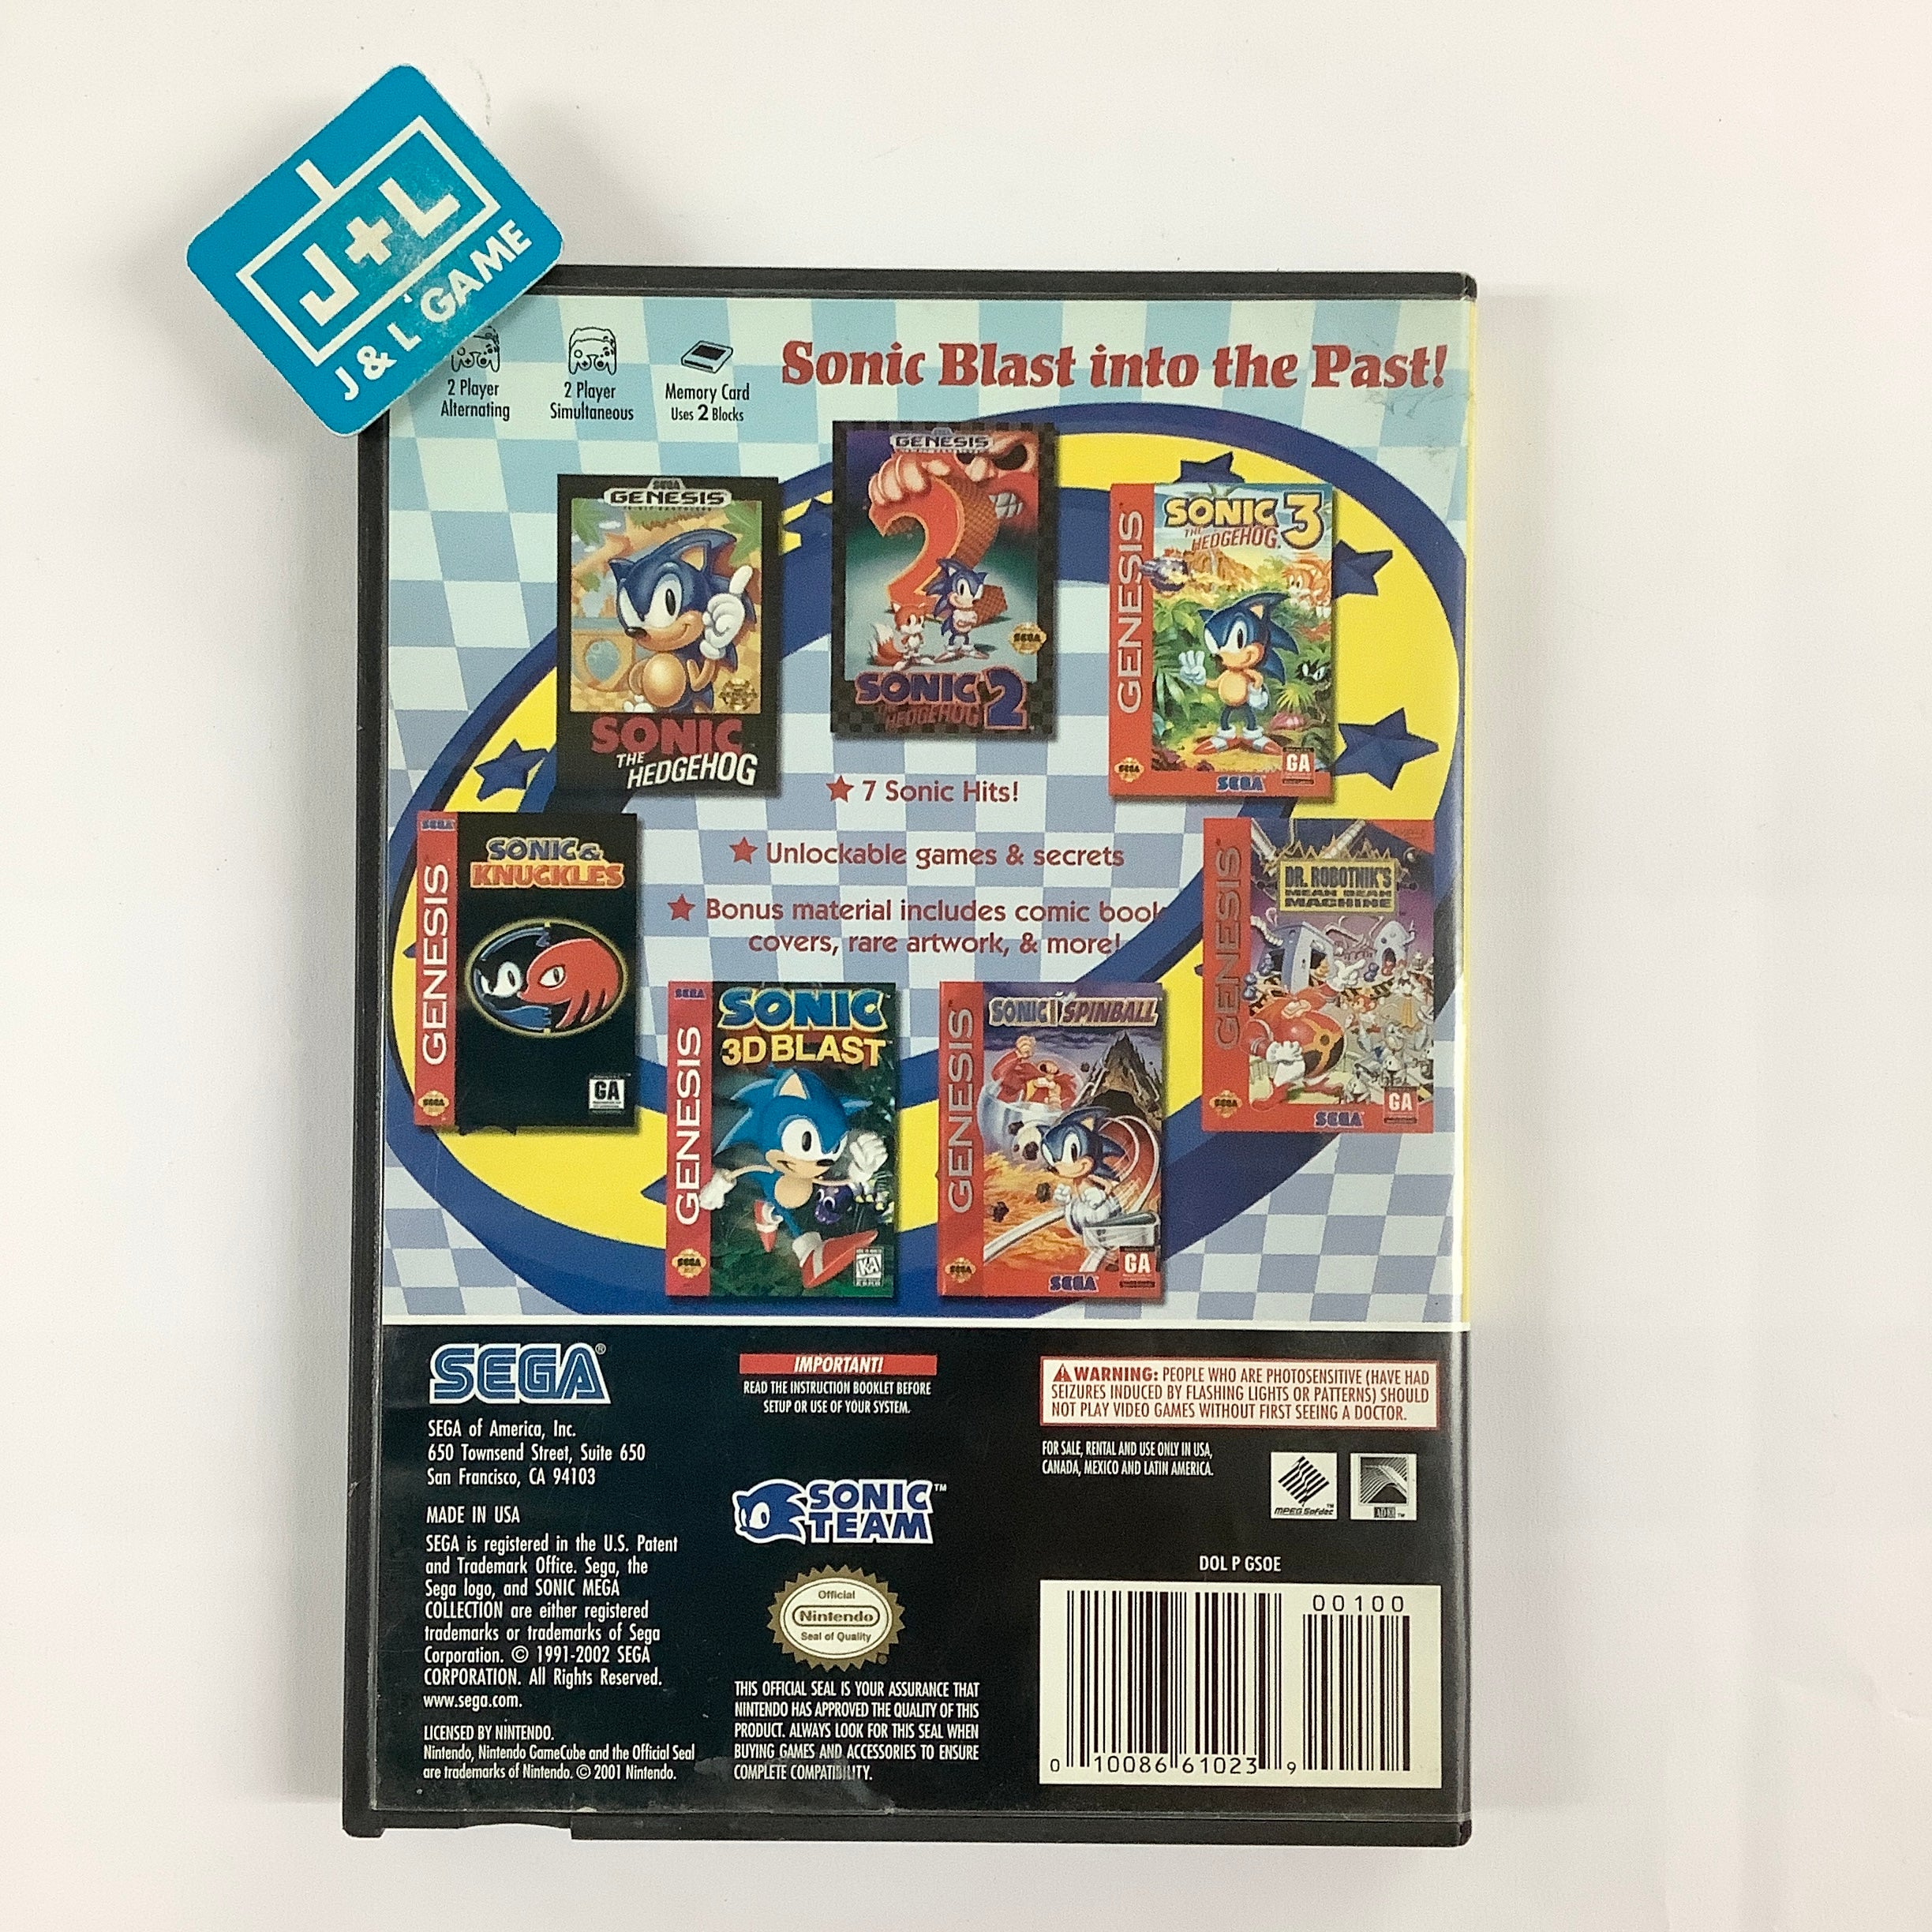 Sonic Mega Collection - (GC) GameCube [Pre-Owned] Video Games Sega   